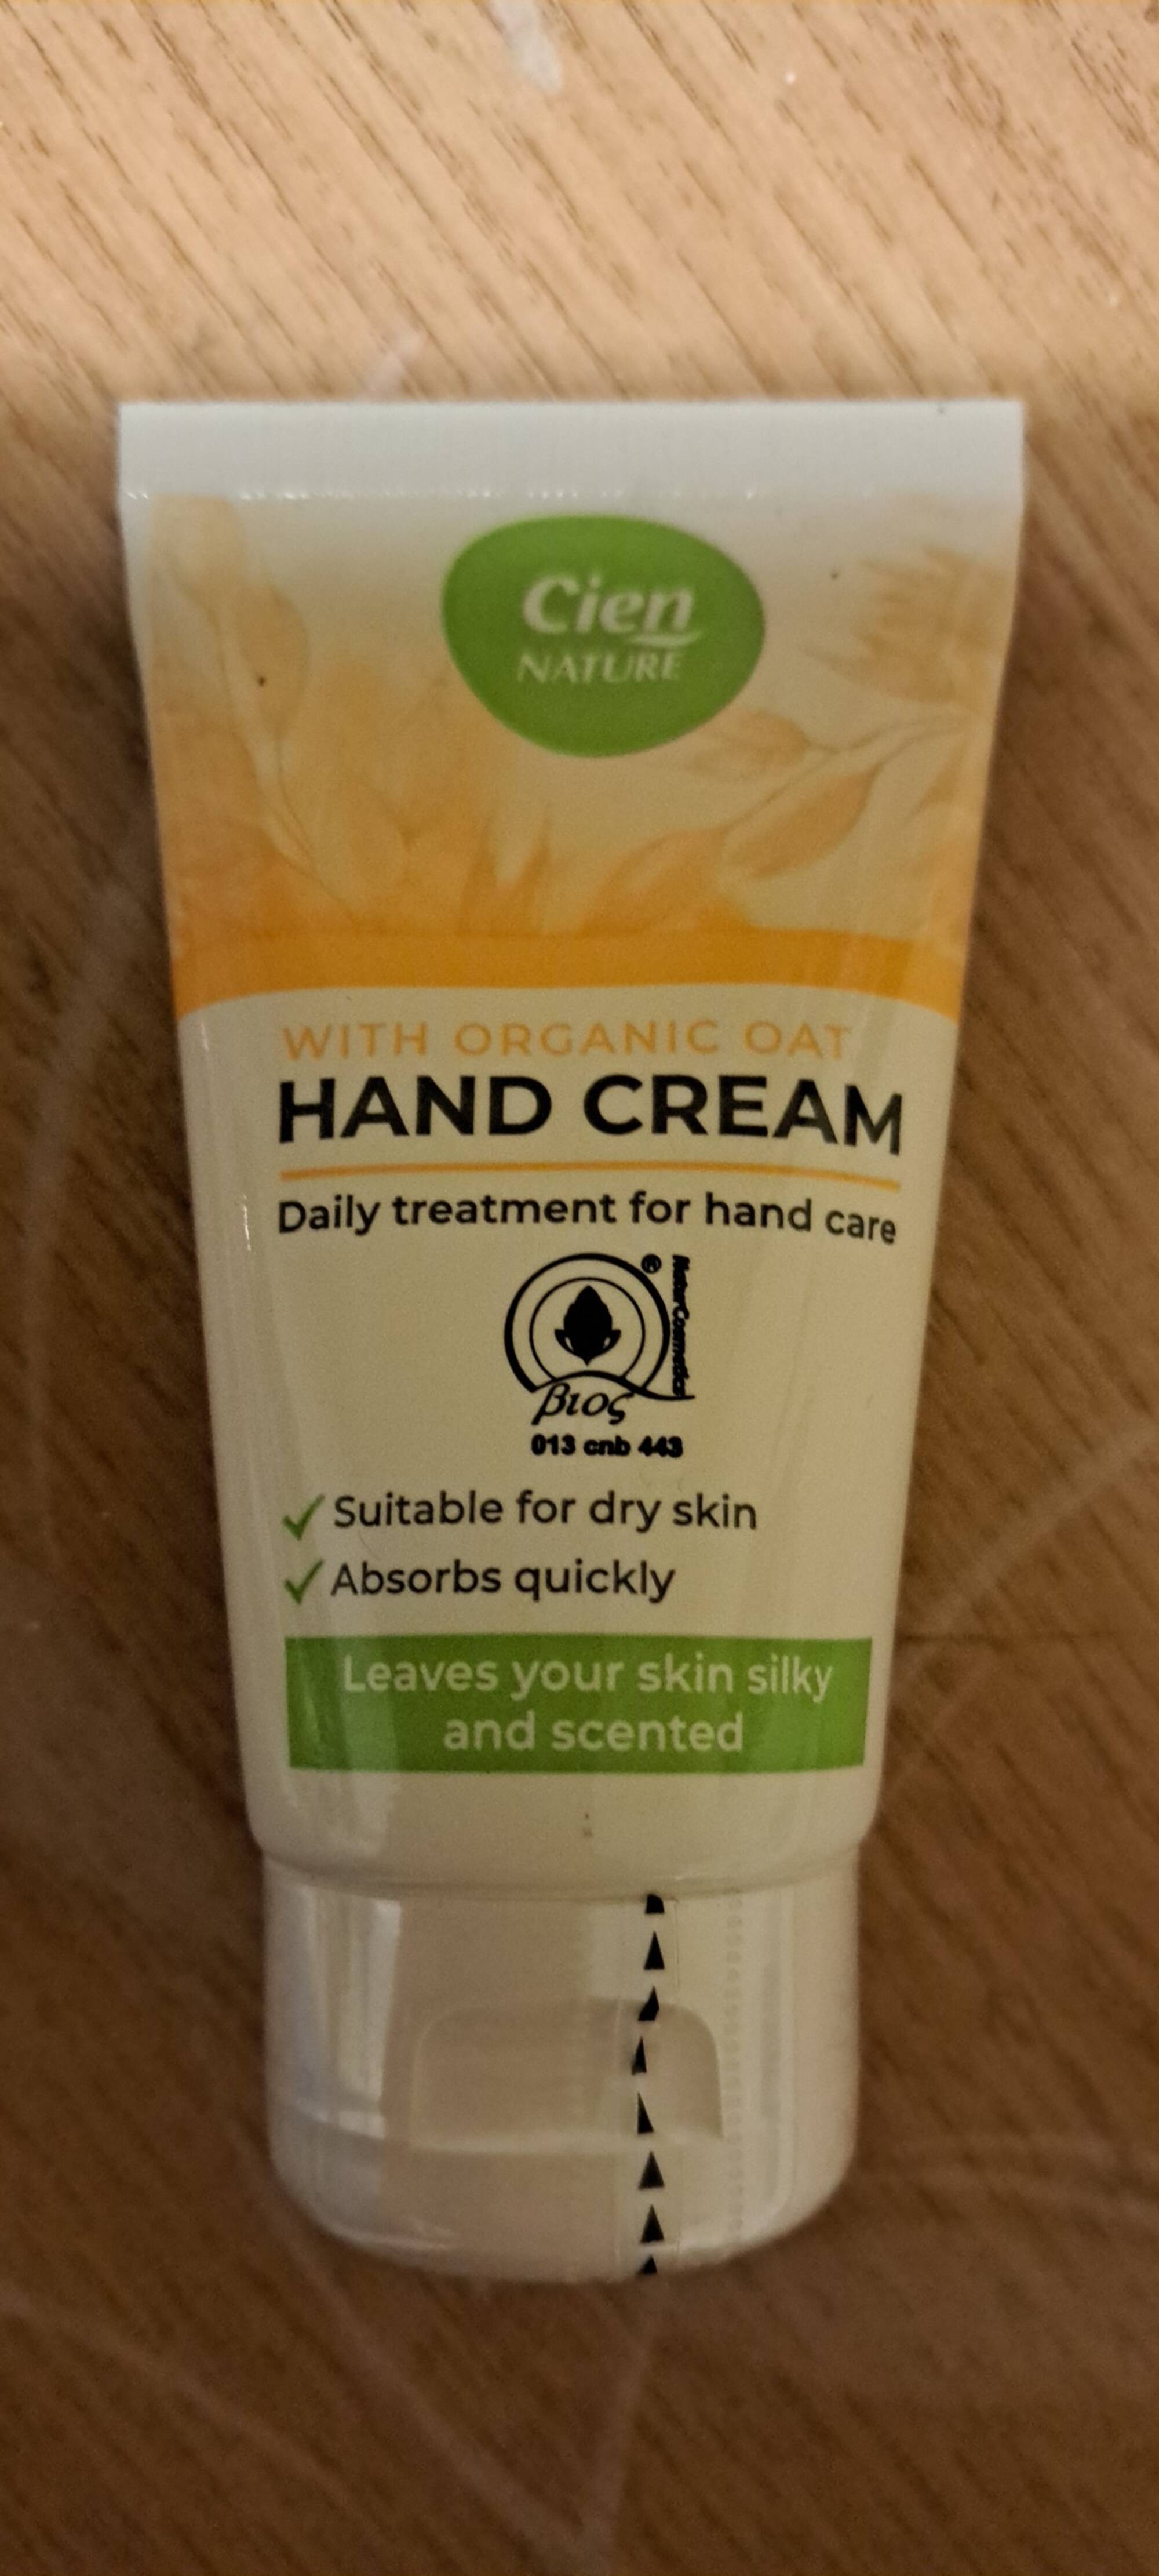 LIDL - Cien nature - Hand cream 